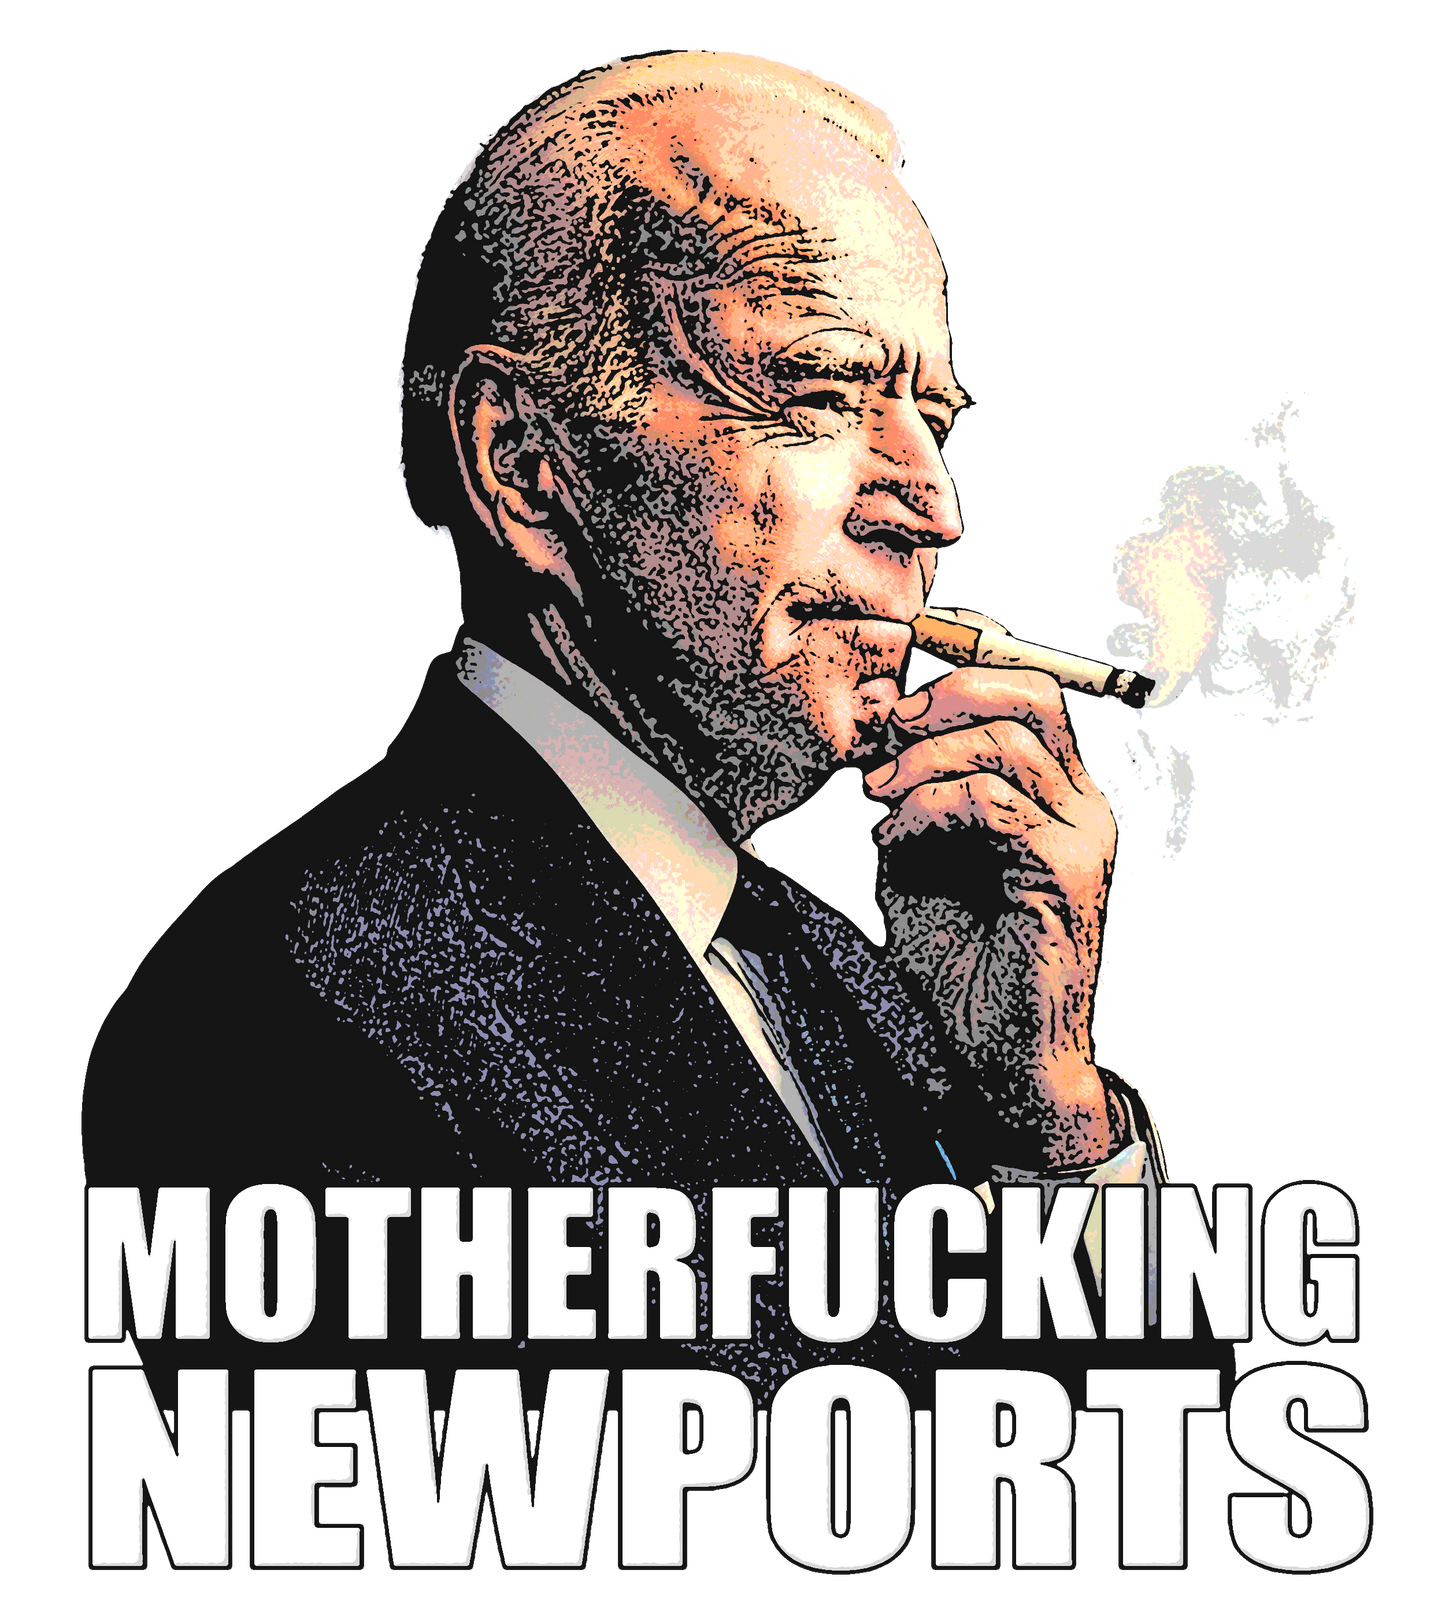 Fashion Politik Joe Biden 2024 Motherfucking Newports T-Shirt - Powder Blue, White, Black - 100% Cotton Premium Comfort Colors